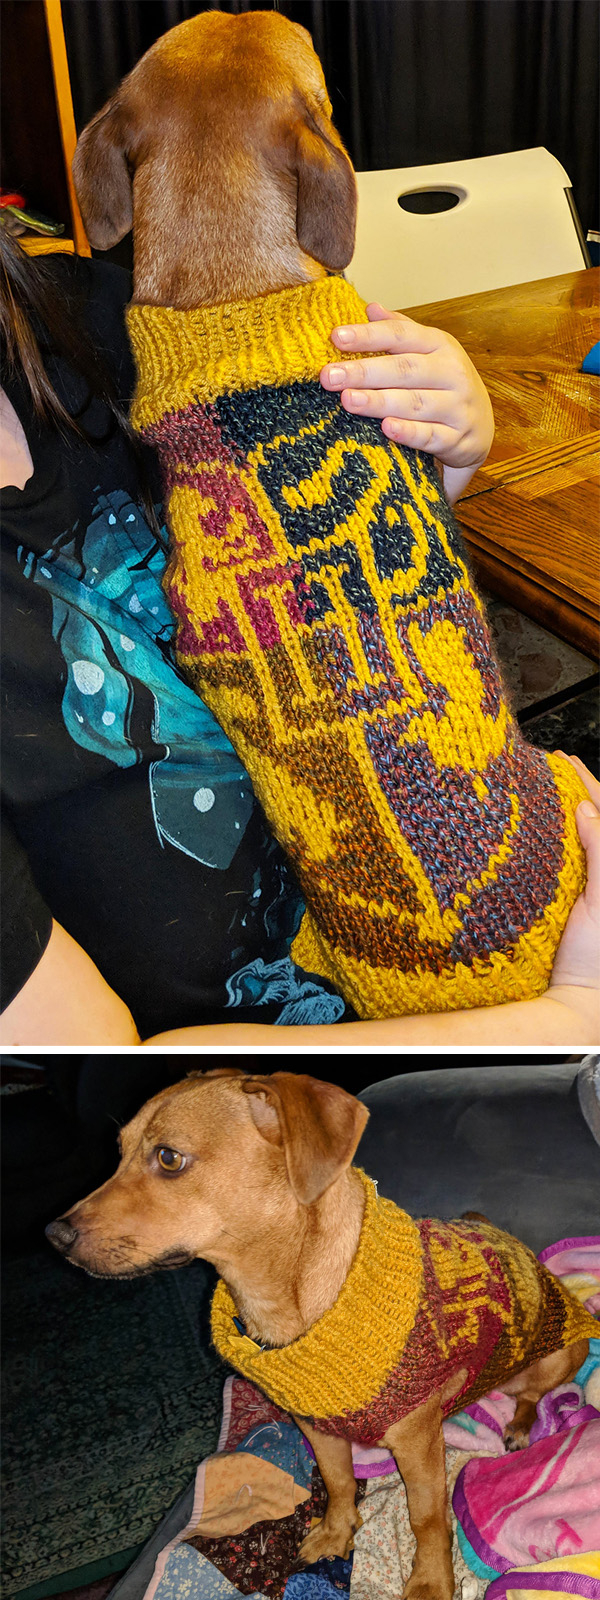 Hogwarts House Scarf Knitting Pattern Harry Potter Knitting Patterns In The Loop Knitting